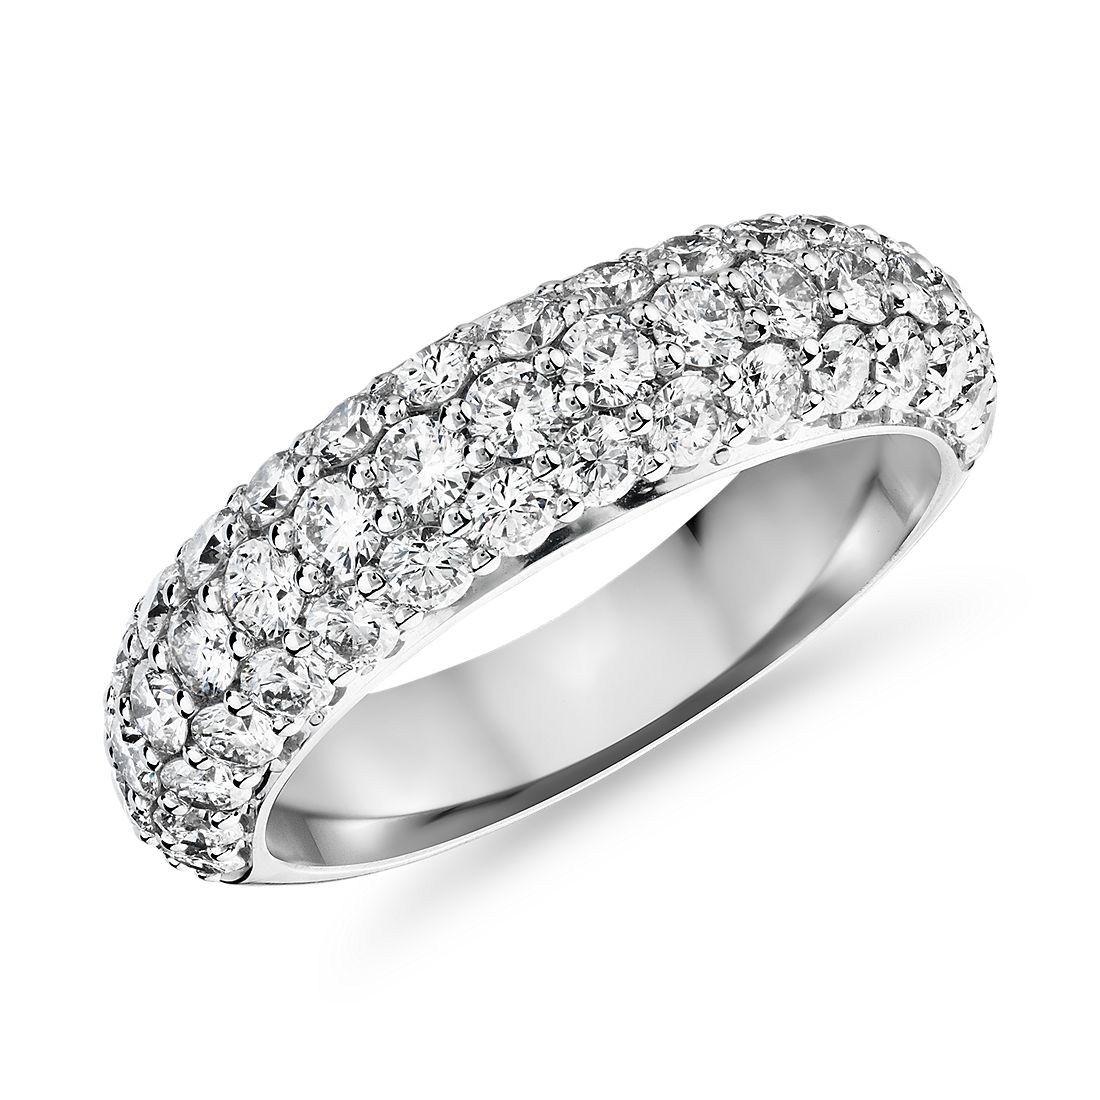 Triple Row Diamond Anniversary Ring in 18k White Gold (1 1/2 ct. tw.)